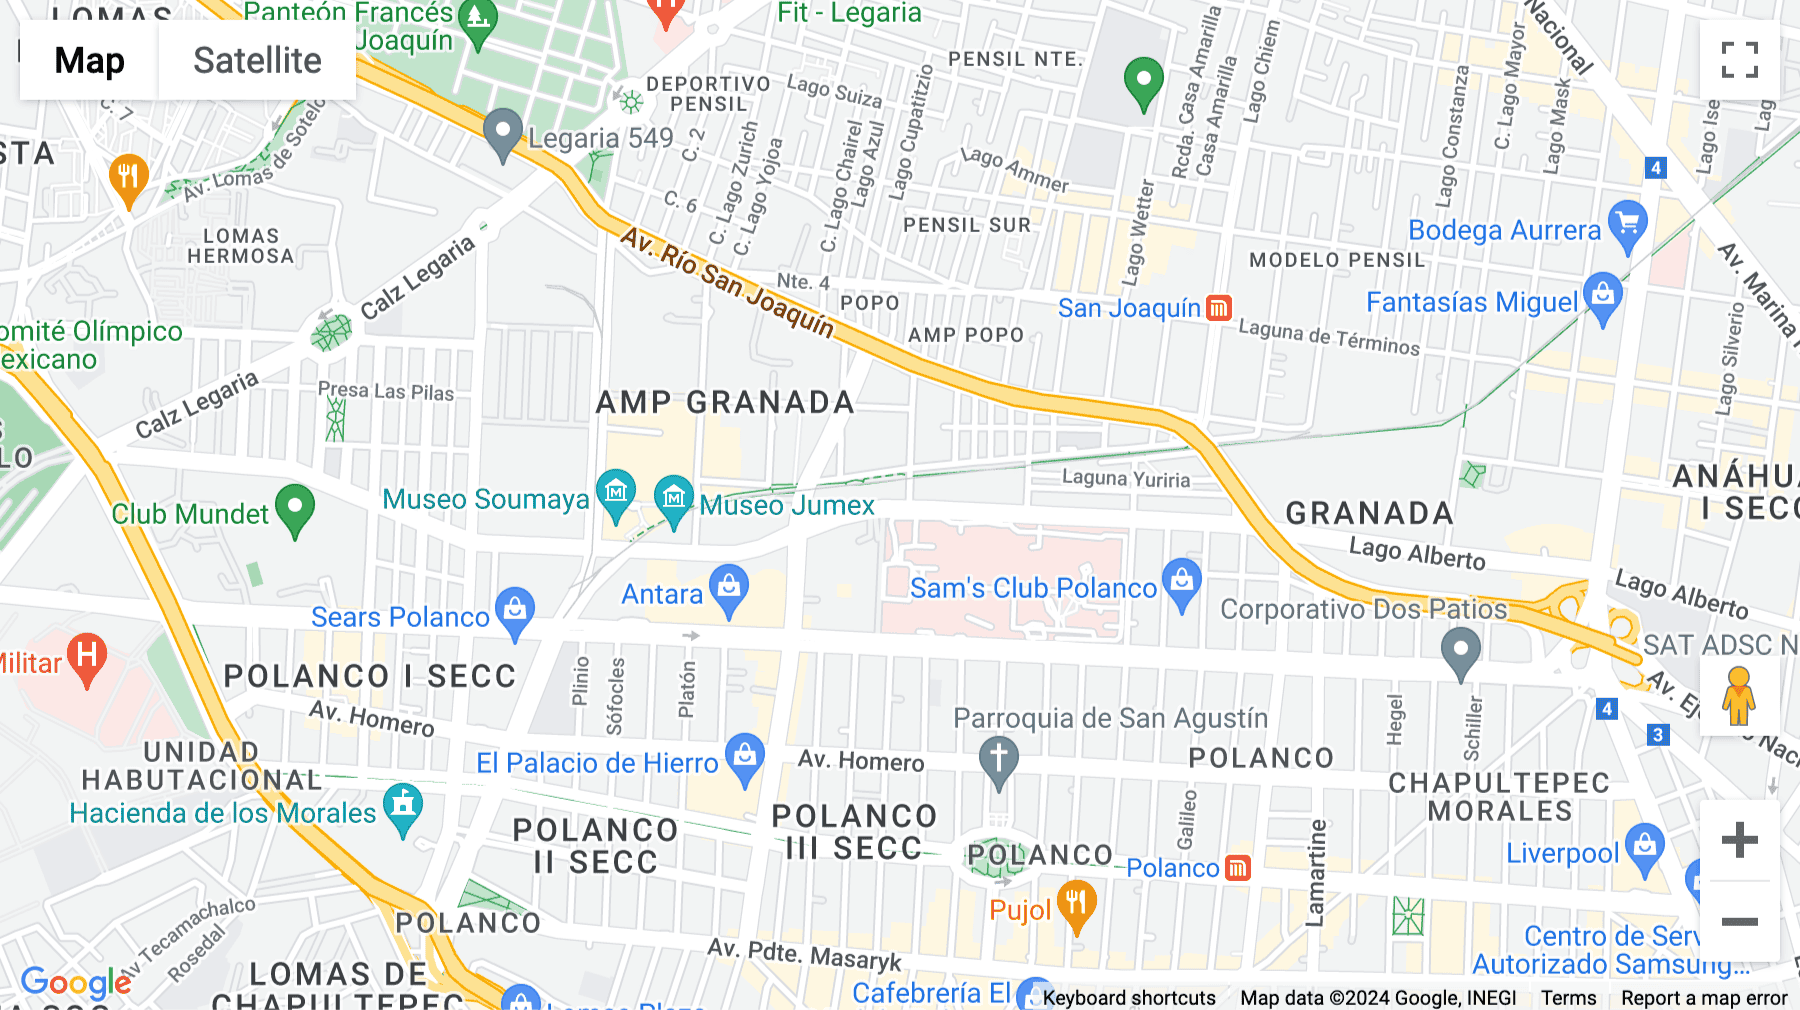 Click for interative map of Av. Miguel de Cervantes Saavedra 301, Col. Granada, 14th floor, Mexico City, Terret Polanco, Mexico City